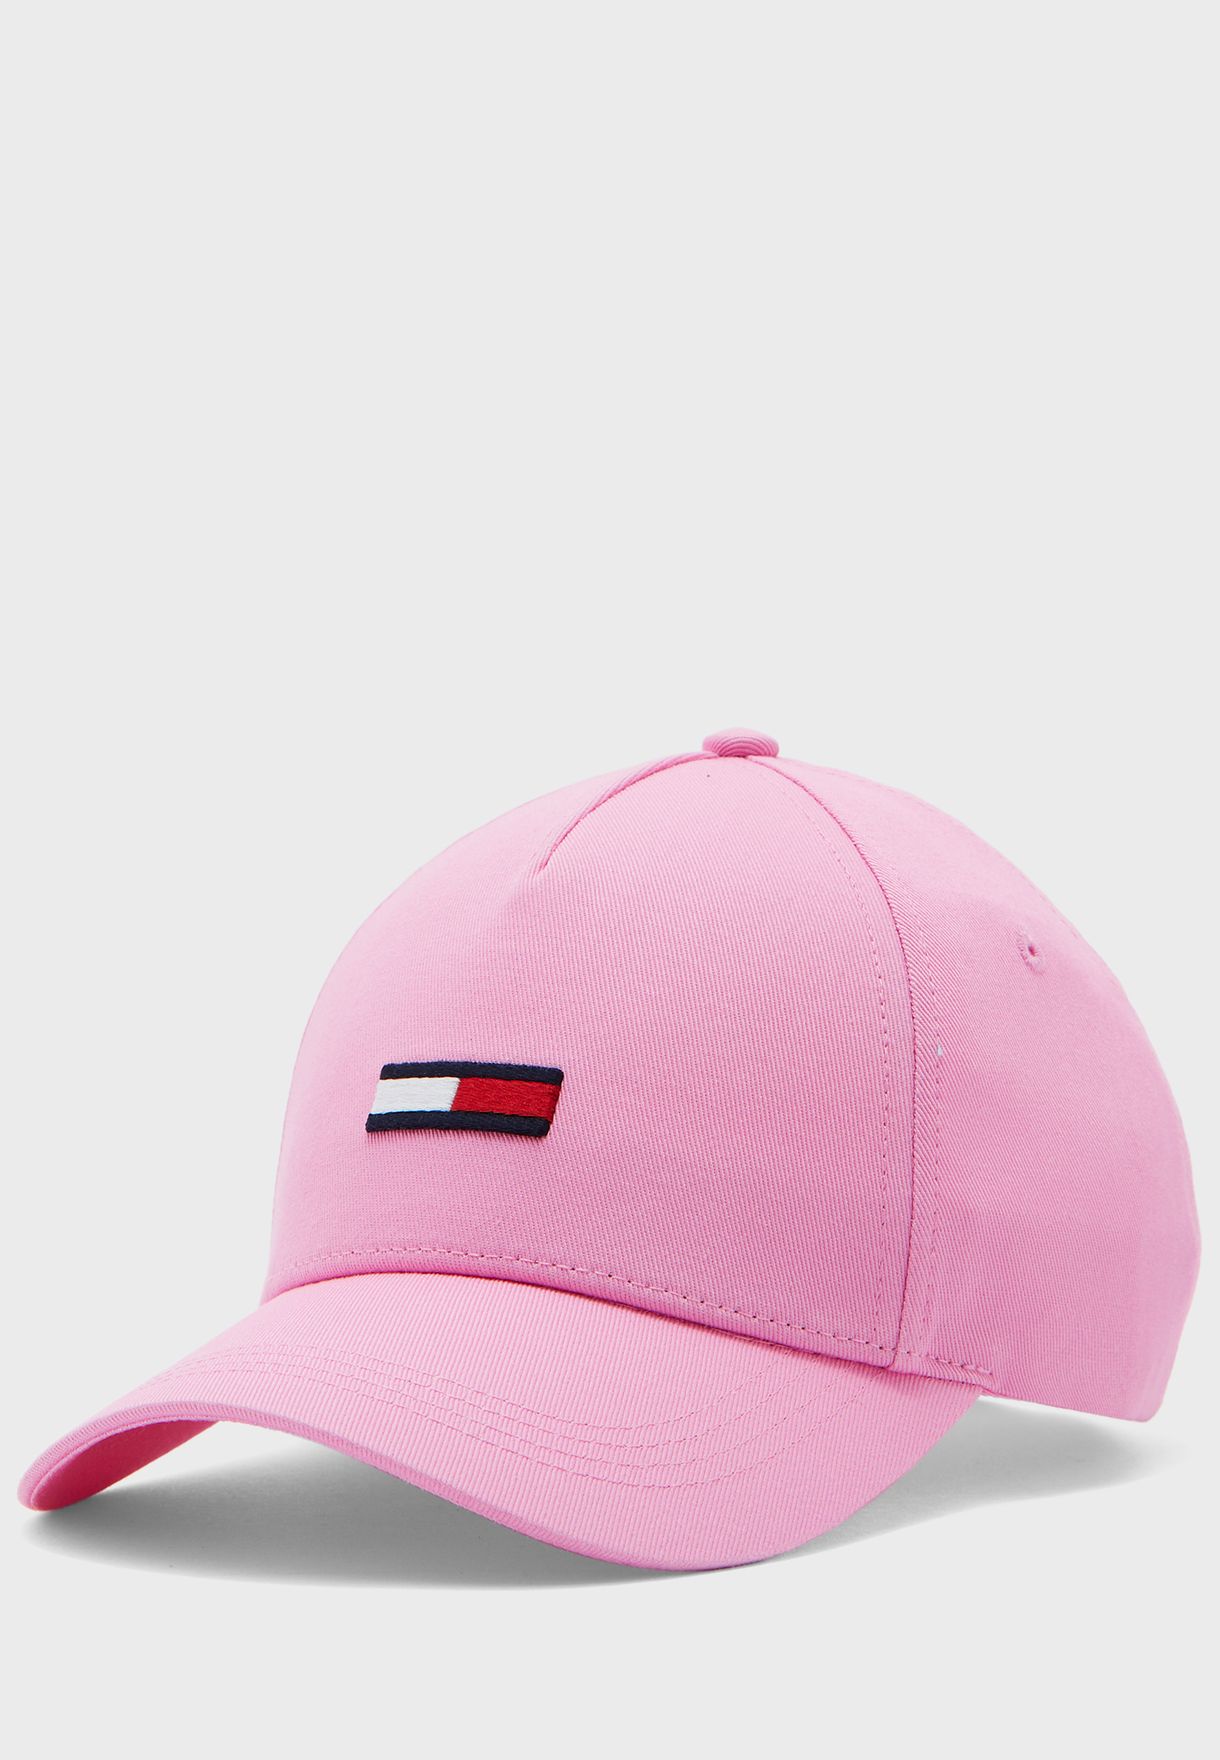 tommy hilfiger pink cap